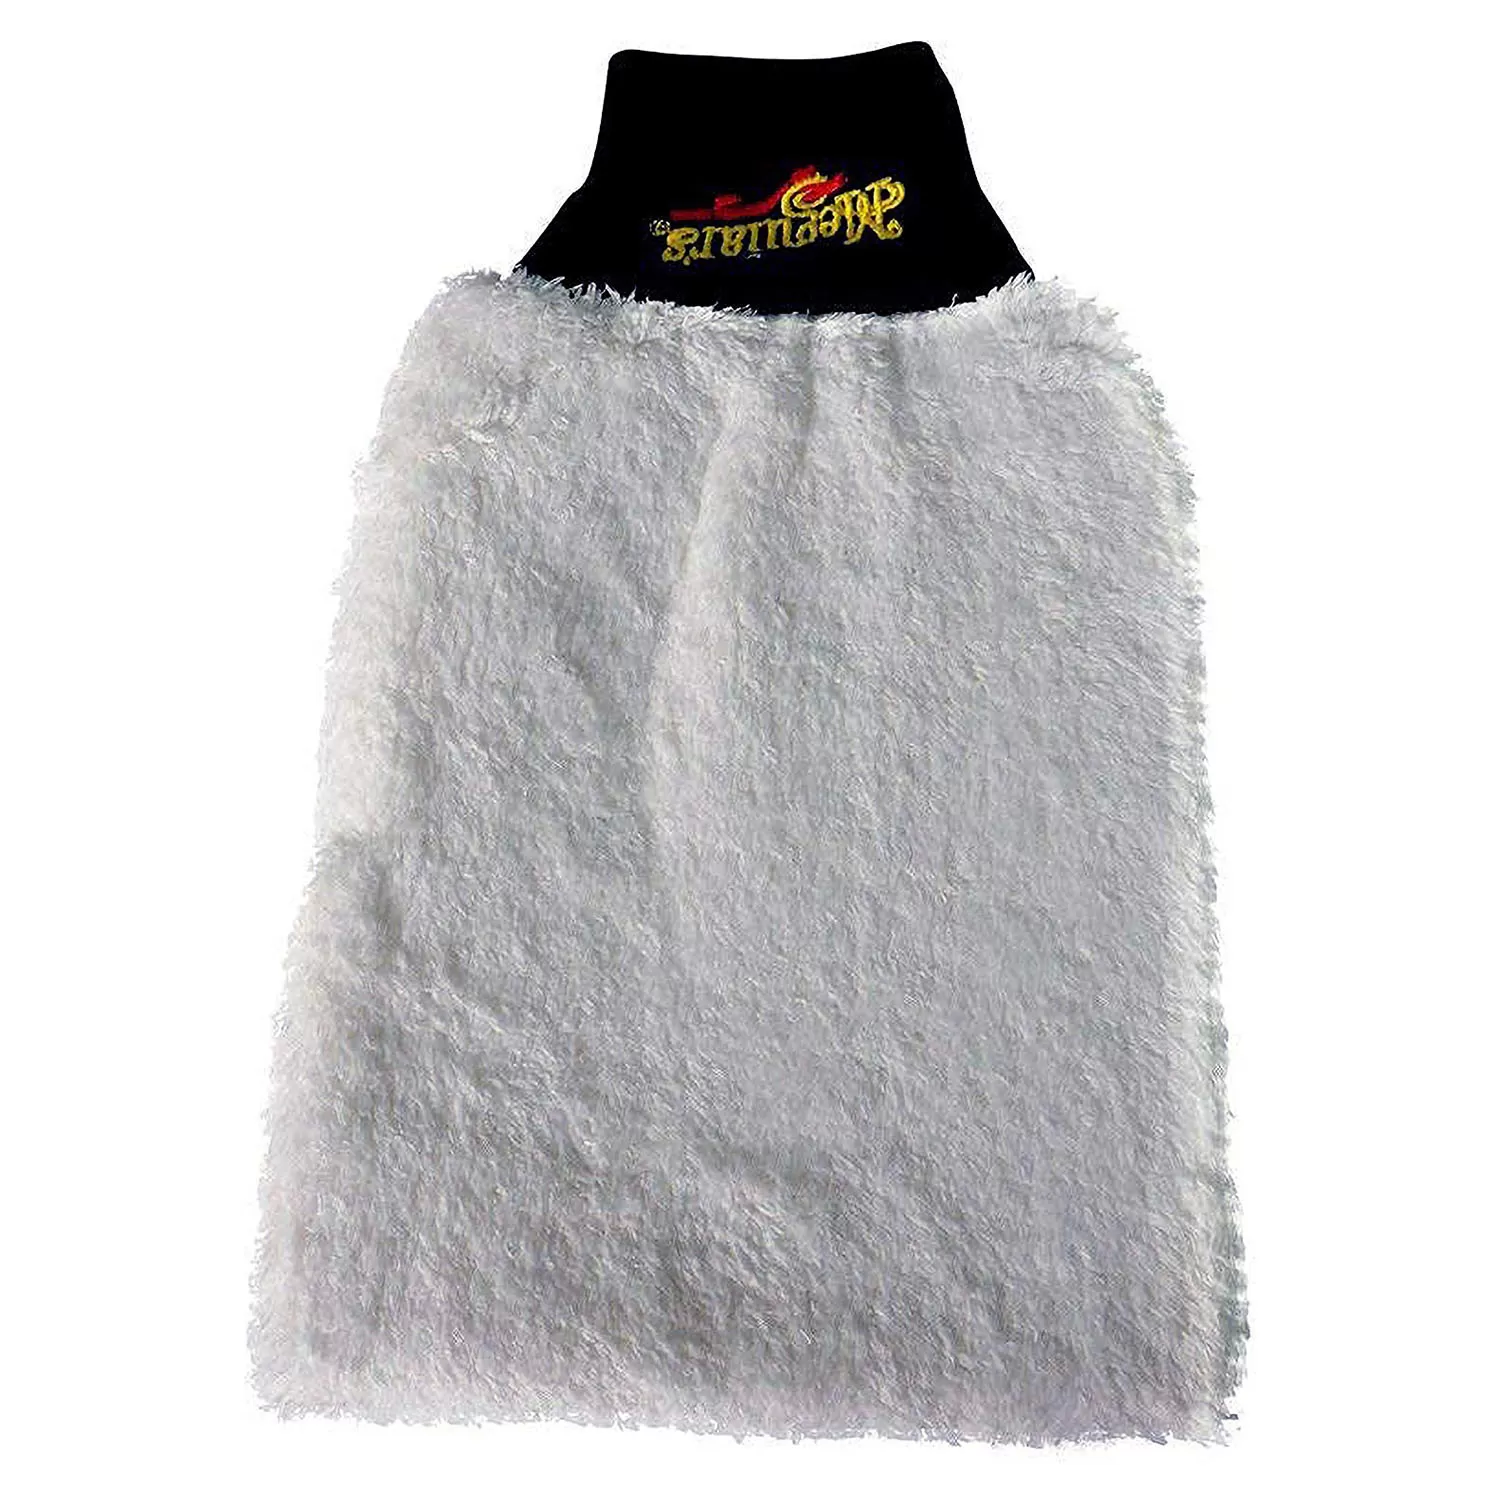 x3002eumg laveta absorbant, 20 x 25 cm, ultra plush wash mitt - meguiars X3002EU MEGUIAR'S